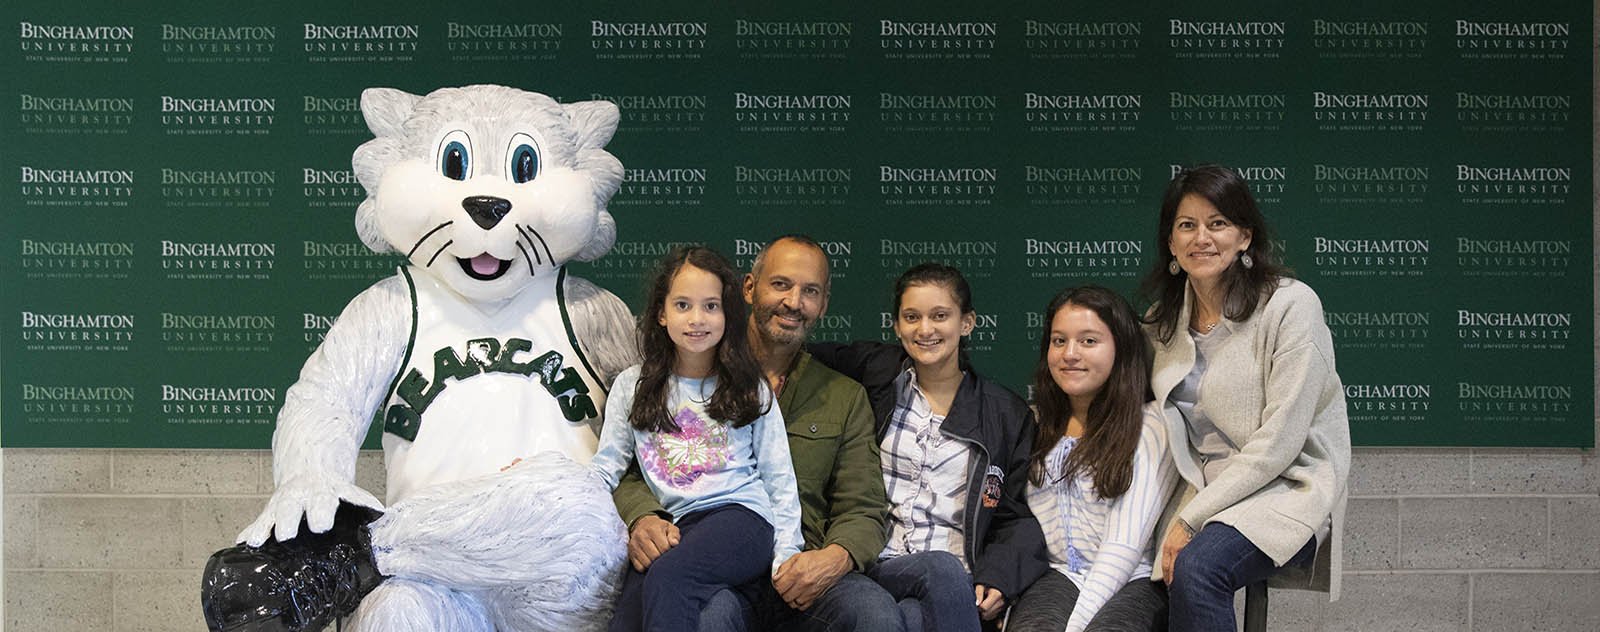 Family Events Parent and Family Programs Binghamton University